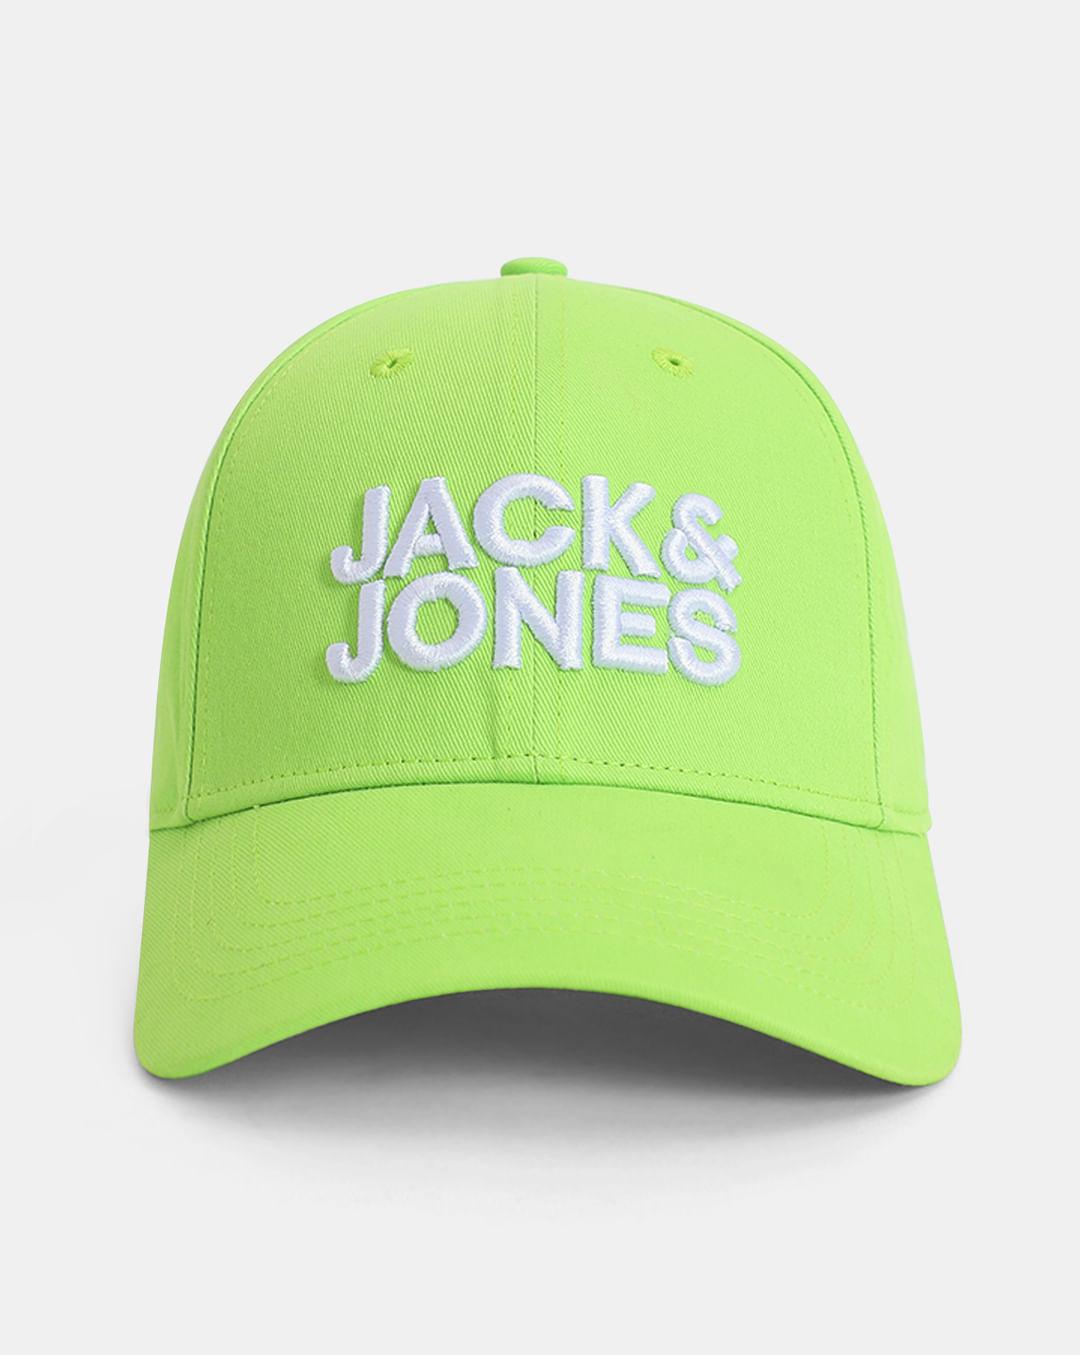 neon green logo print baseball cap